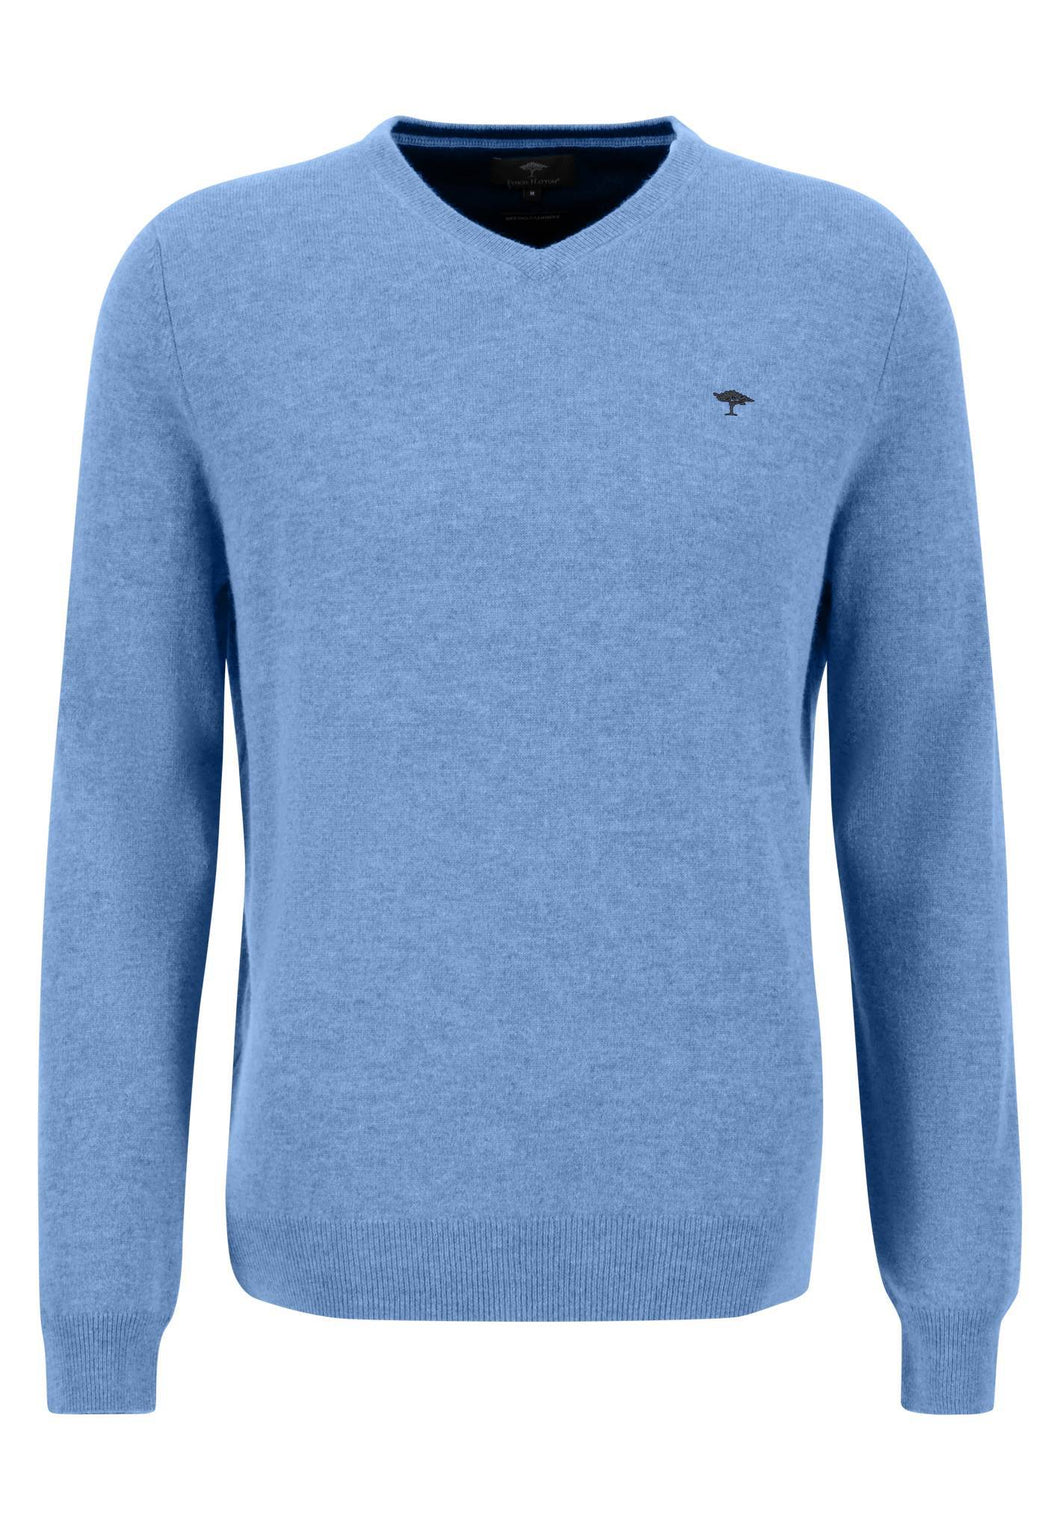 New Fynch Hatton Cashmere/Merino Sky V Neck Sweater